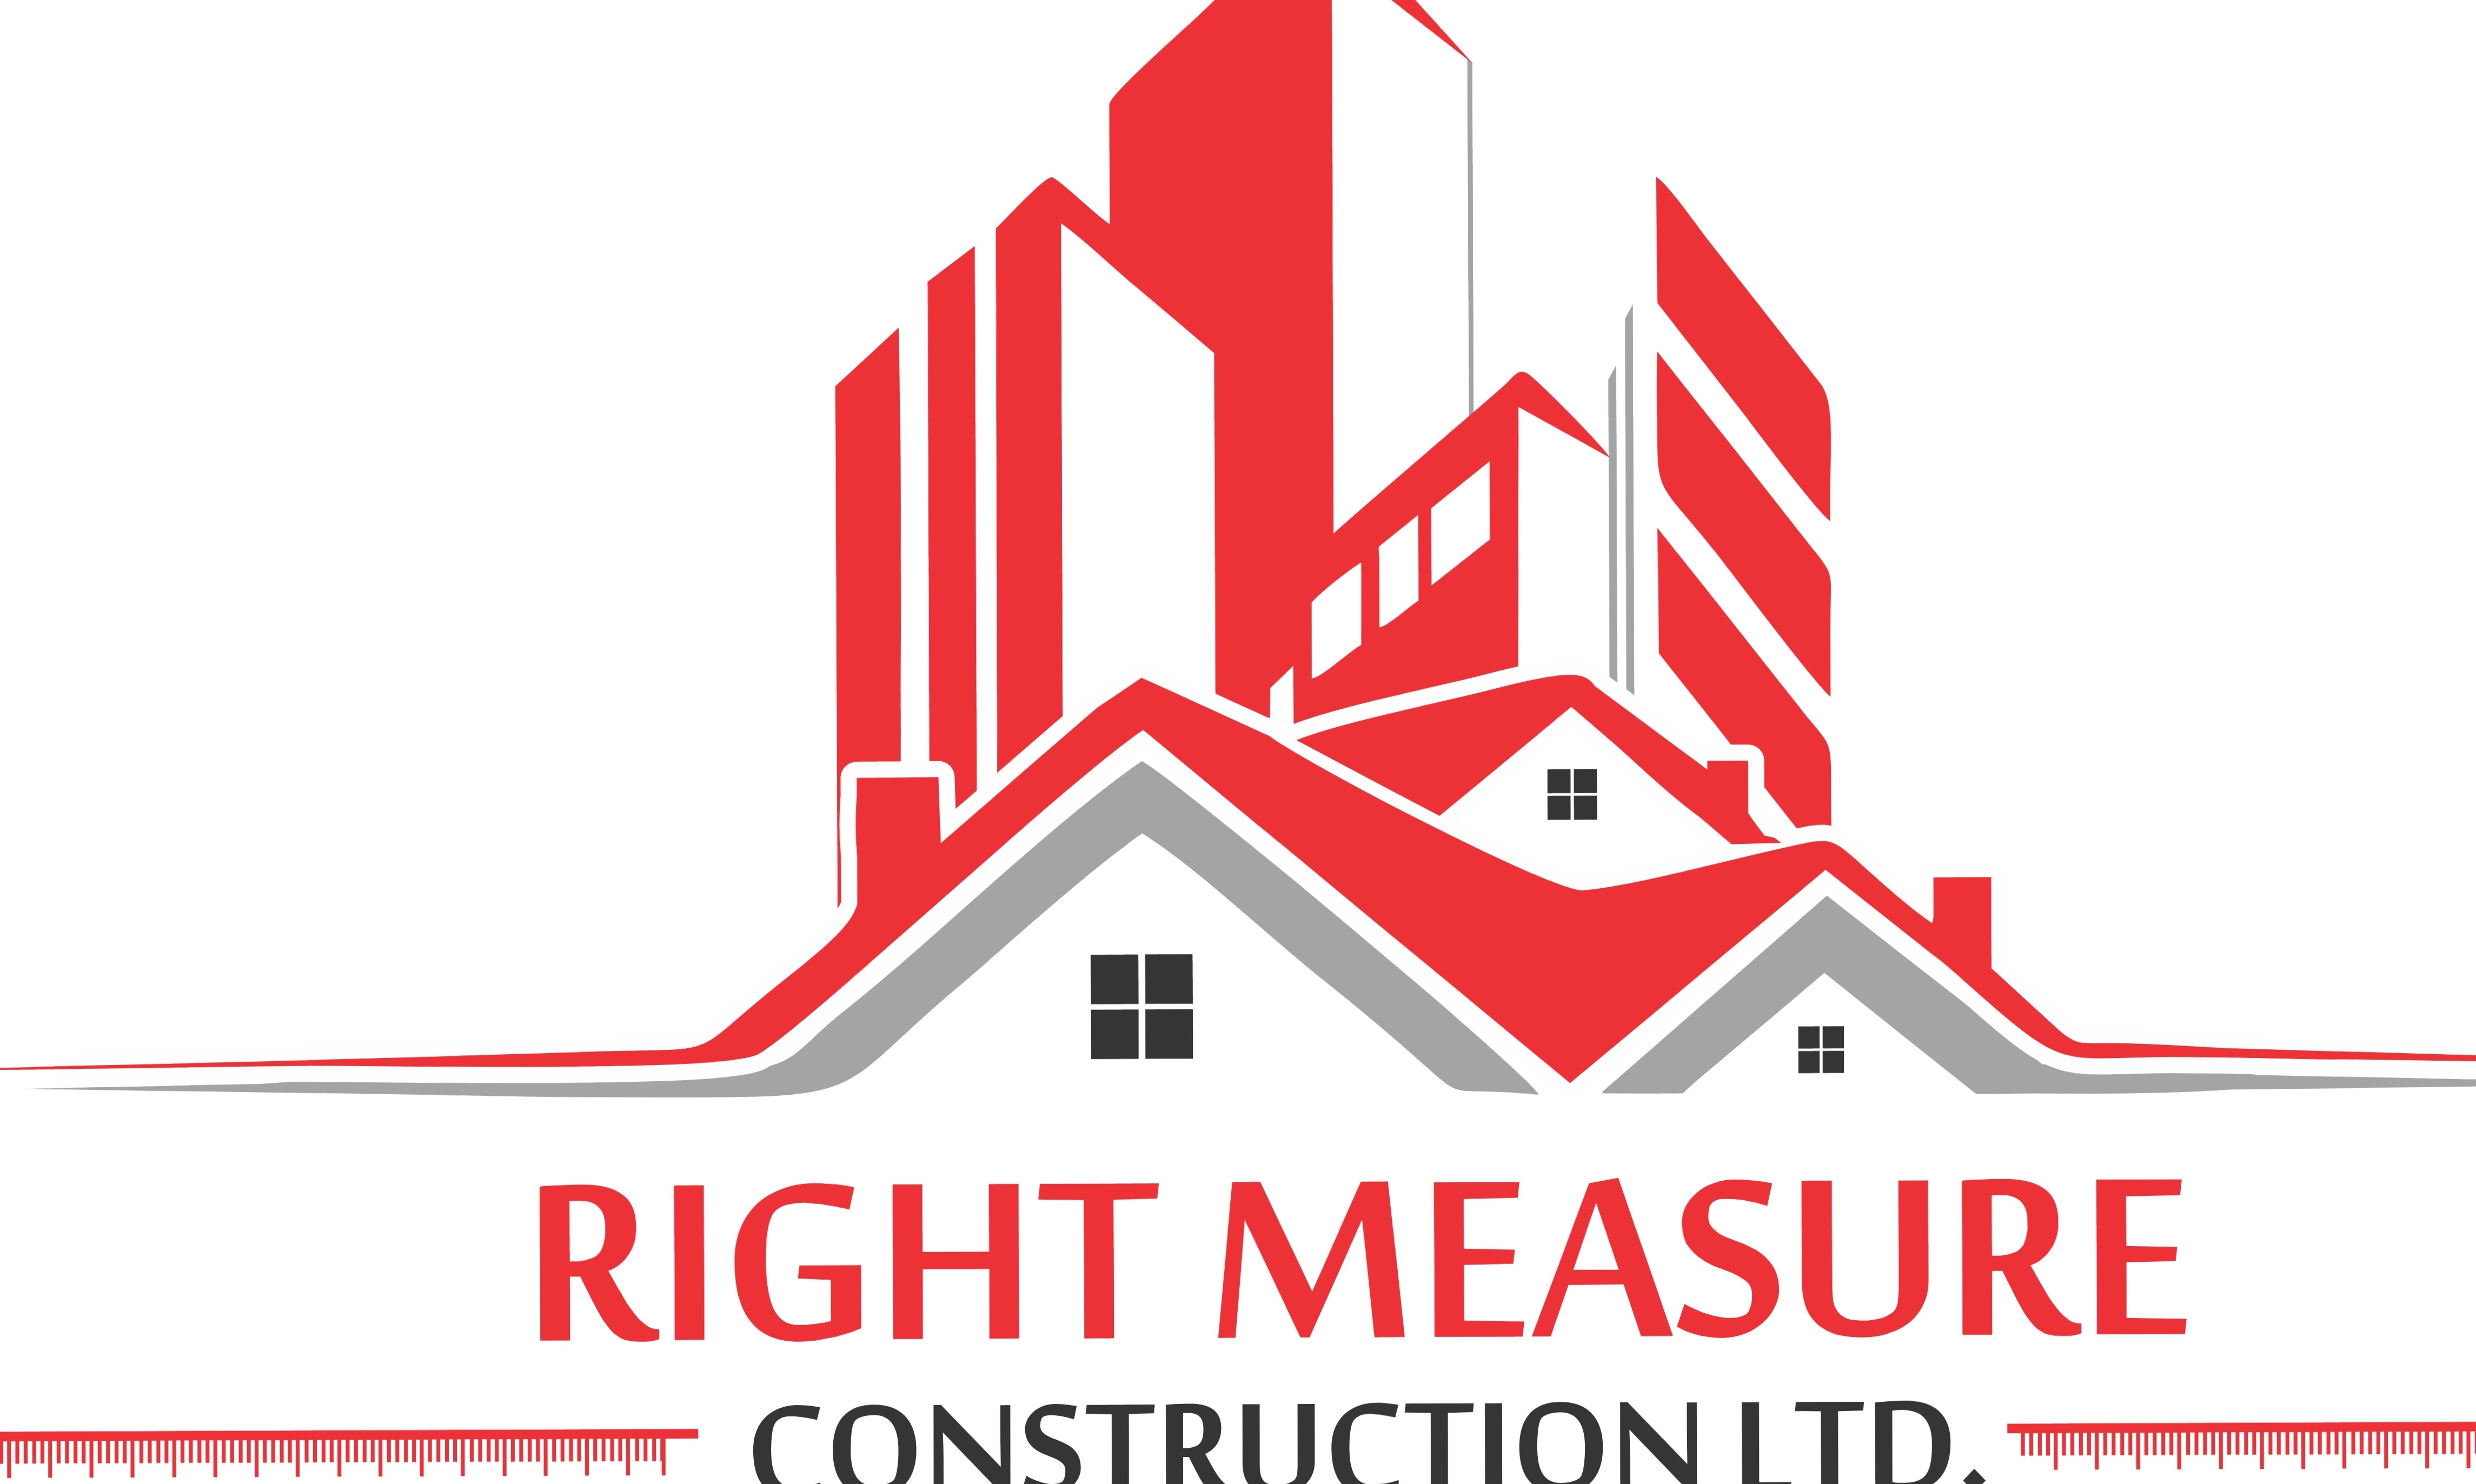 Right Measure Construction Ltd.'s logo